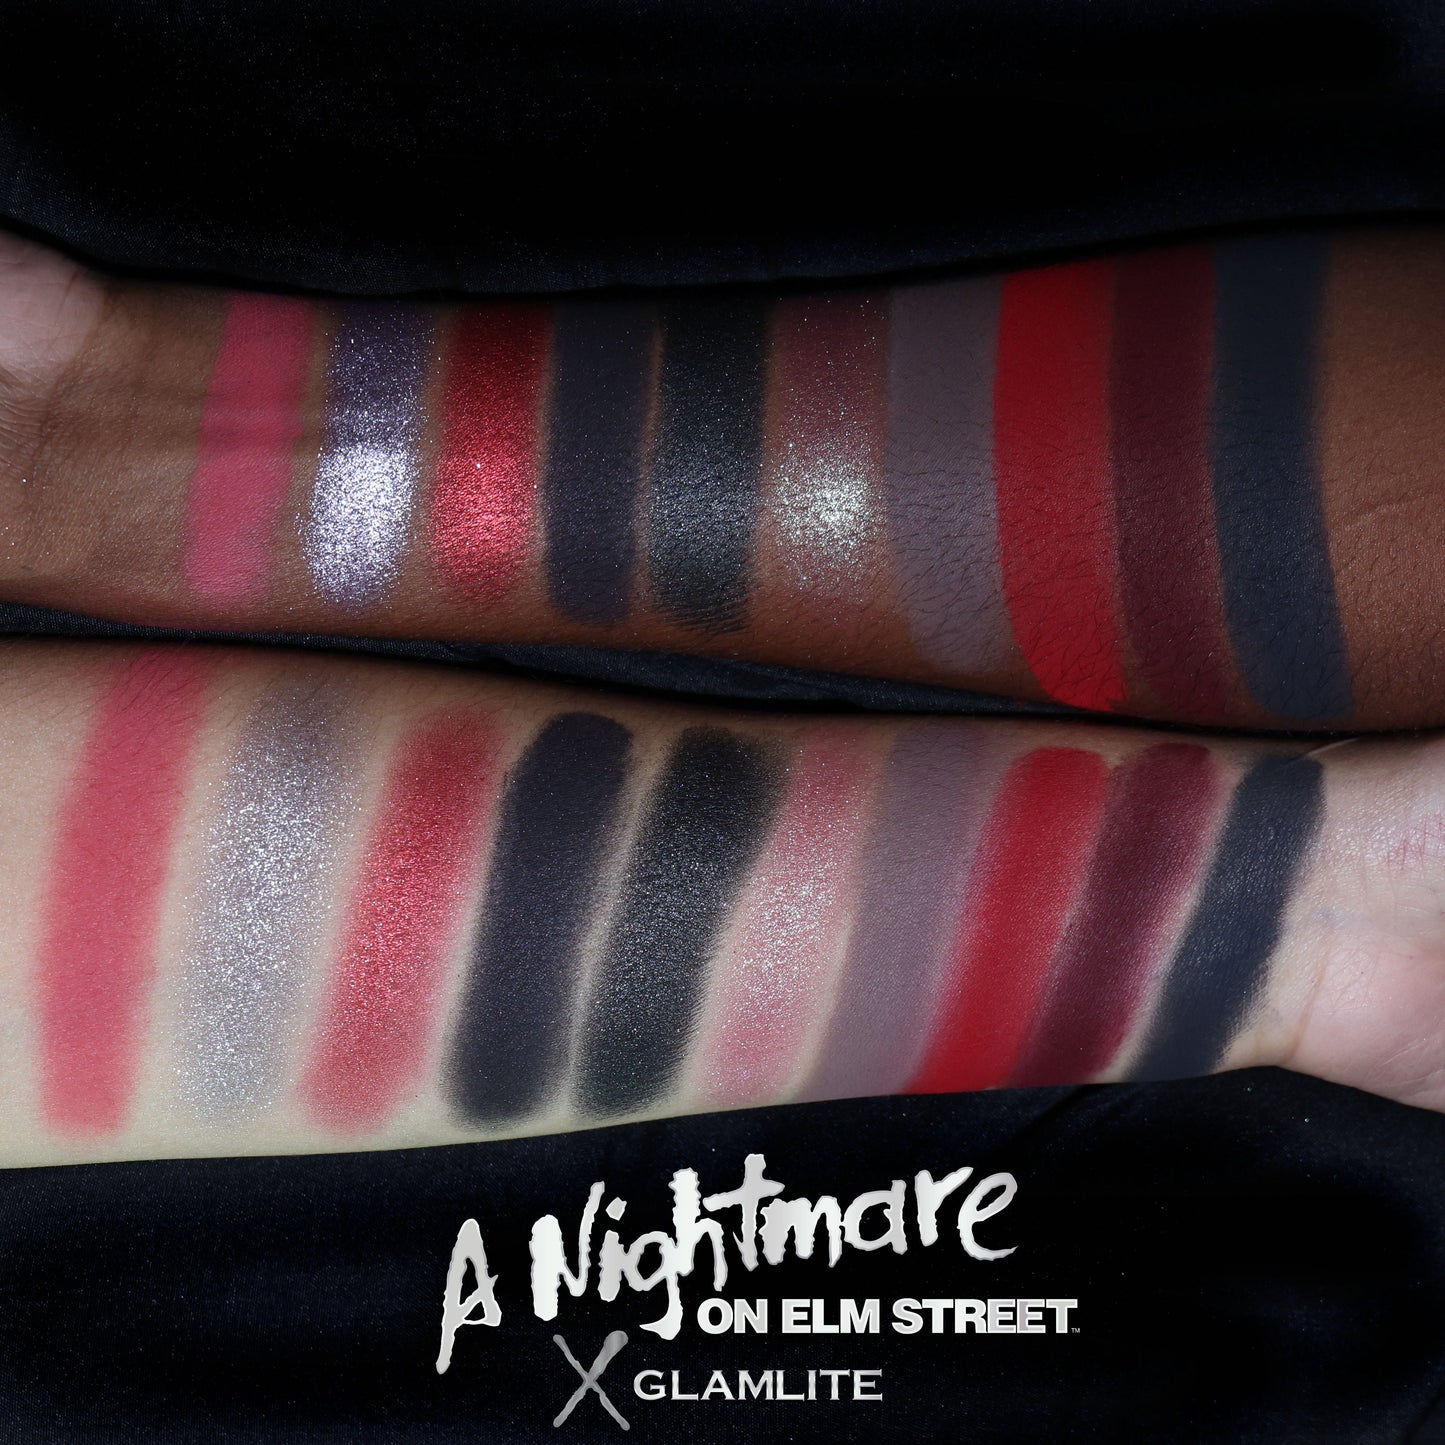 Nightmare on Elm street Dream Master eyeshadow palette swatches by Glamlite